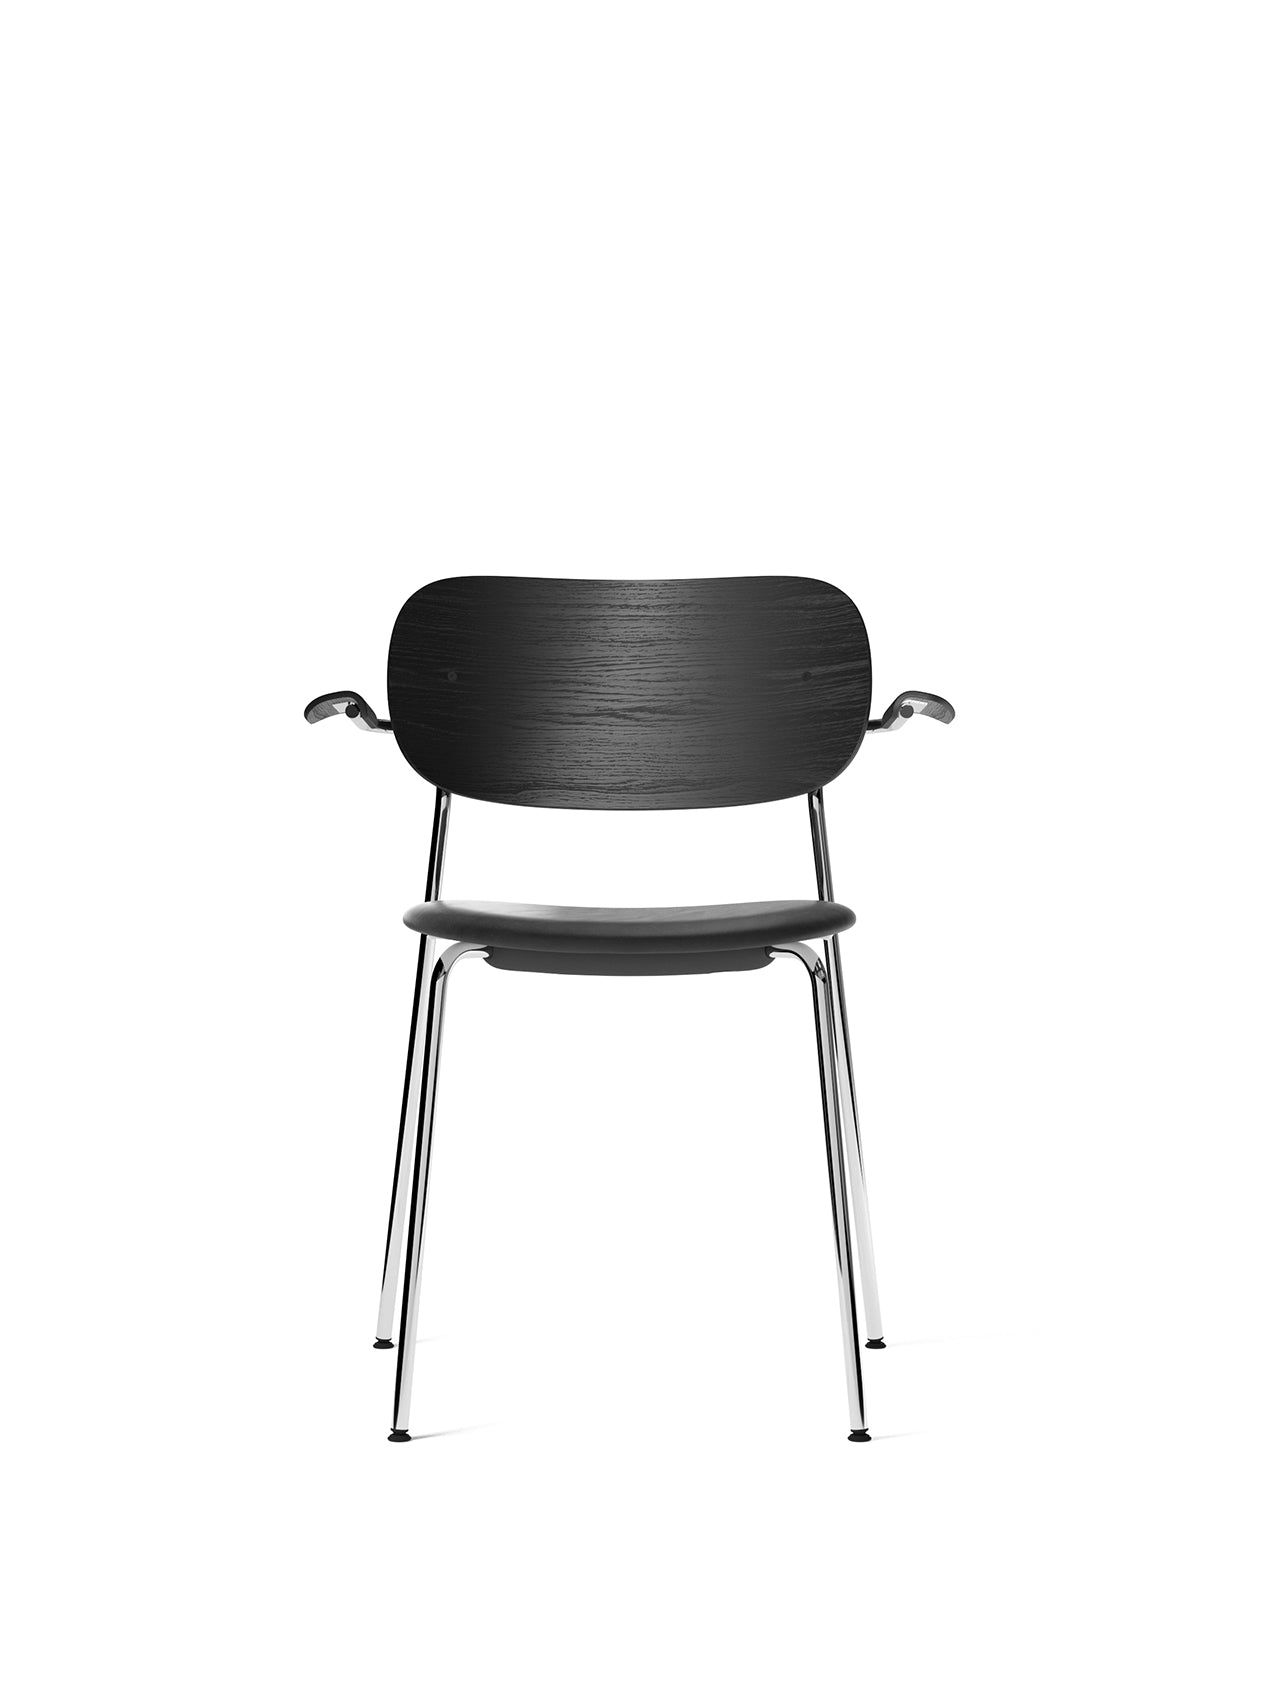 Menu - Co eetkamerstoel met armleuning, chrome stalen frame, Upholstered Seat PC1L, Oak Back And Arms, zwart eiken, 0842 (Black)